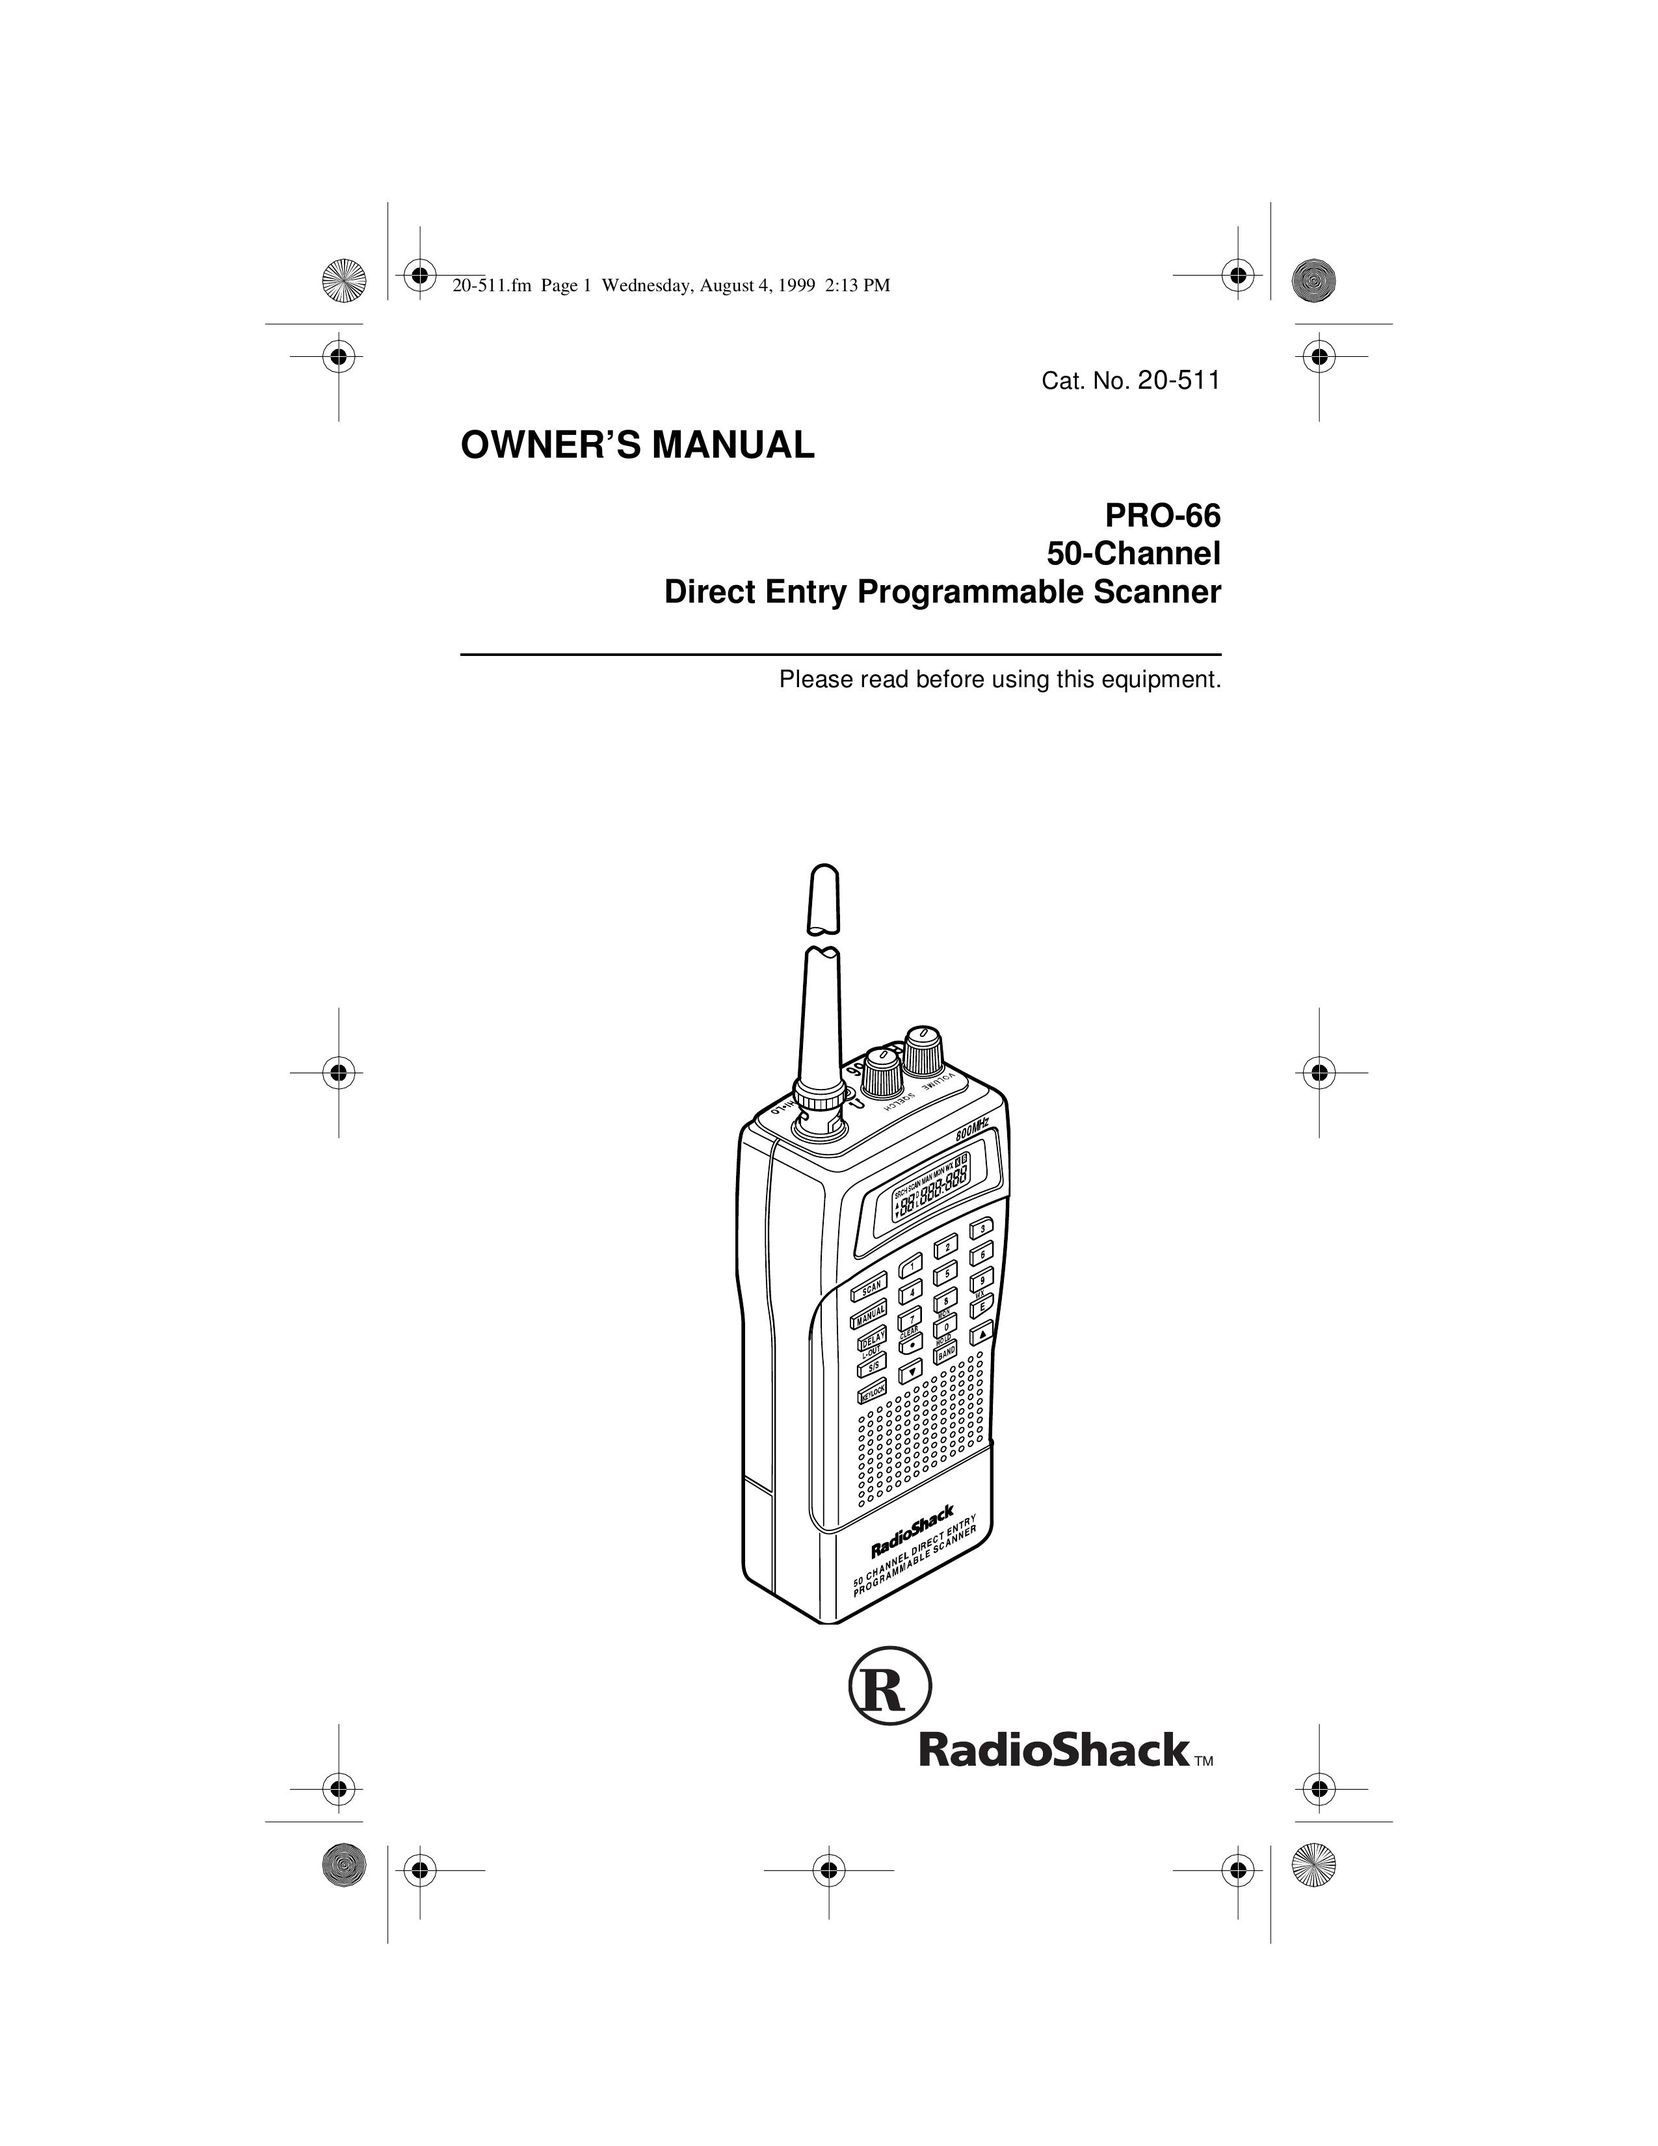 Radio Shack PRO-66 Scanner User Manual